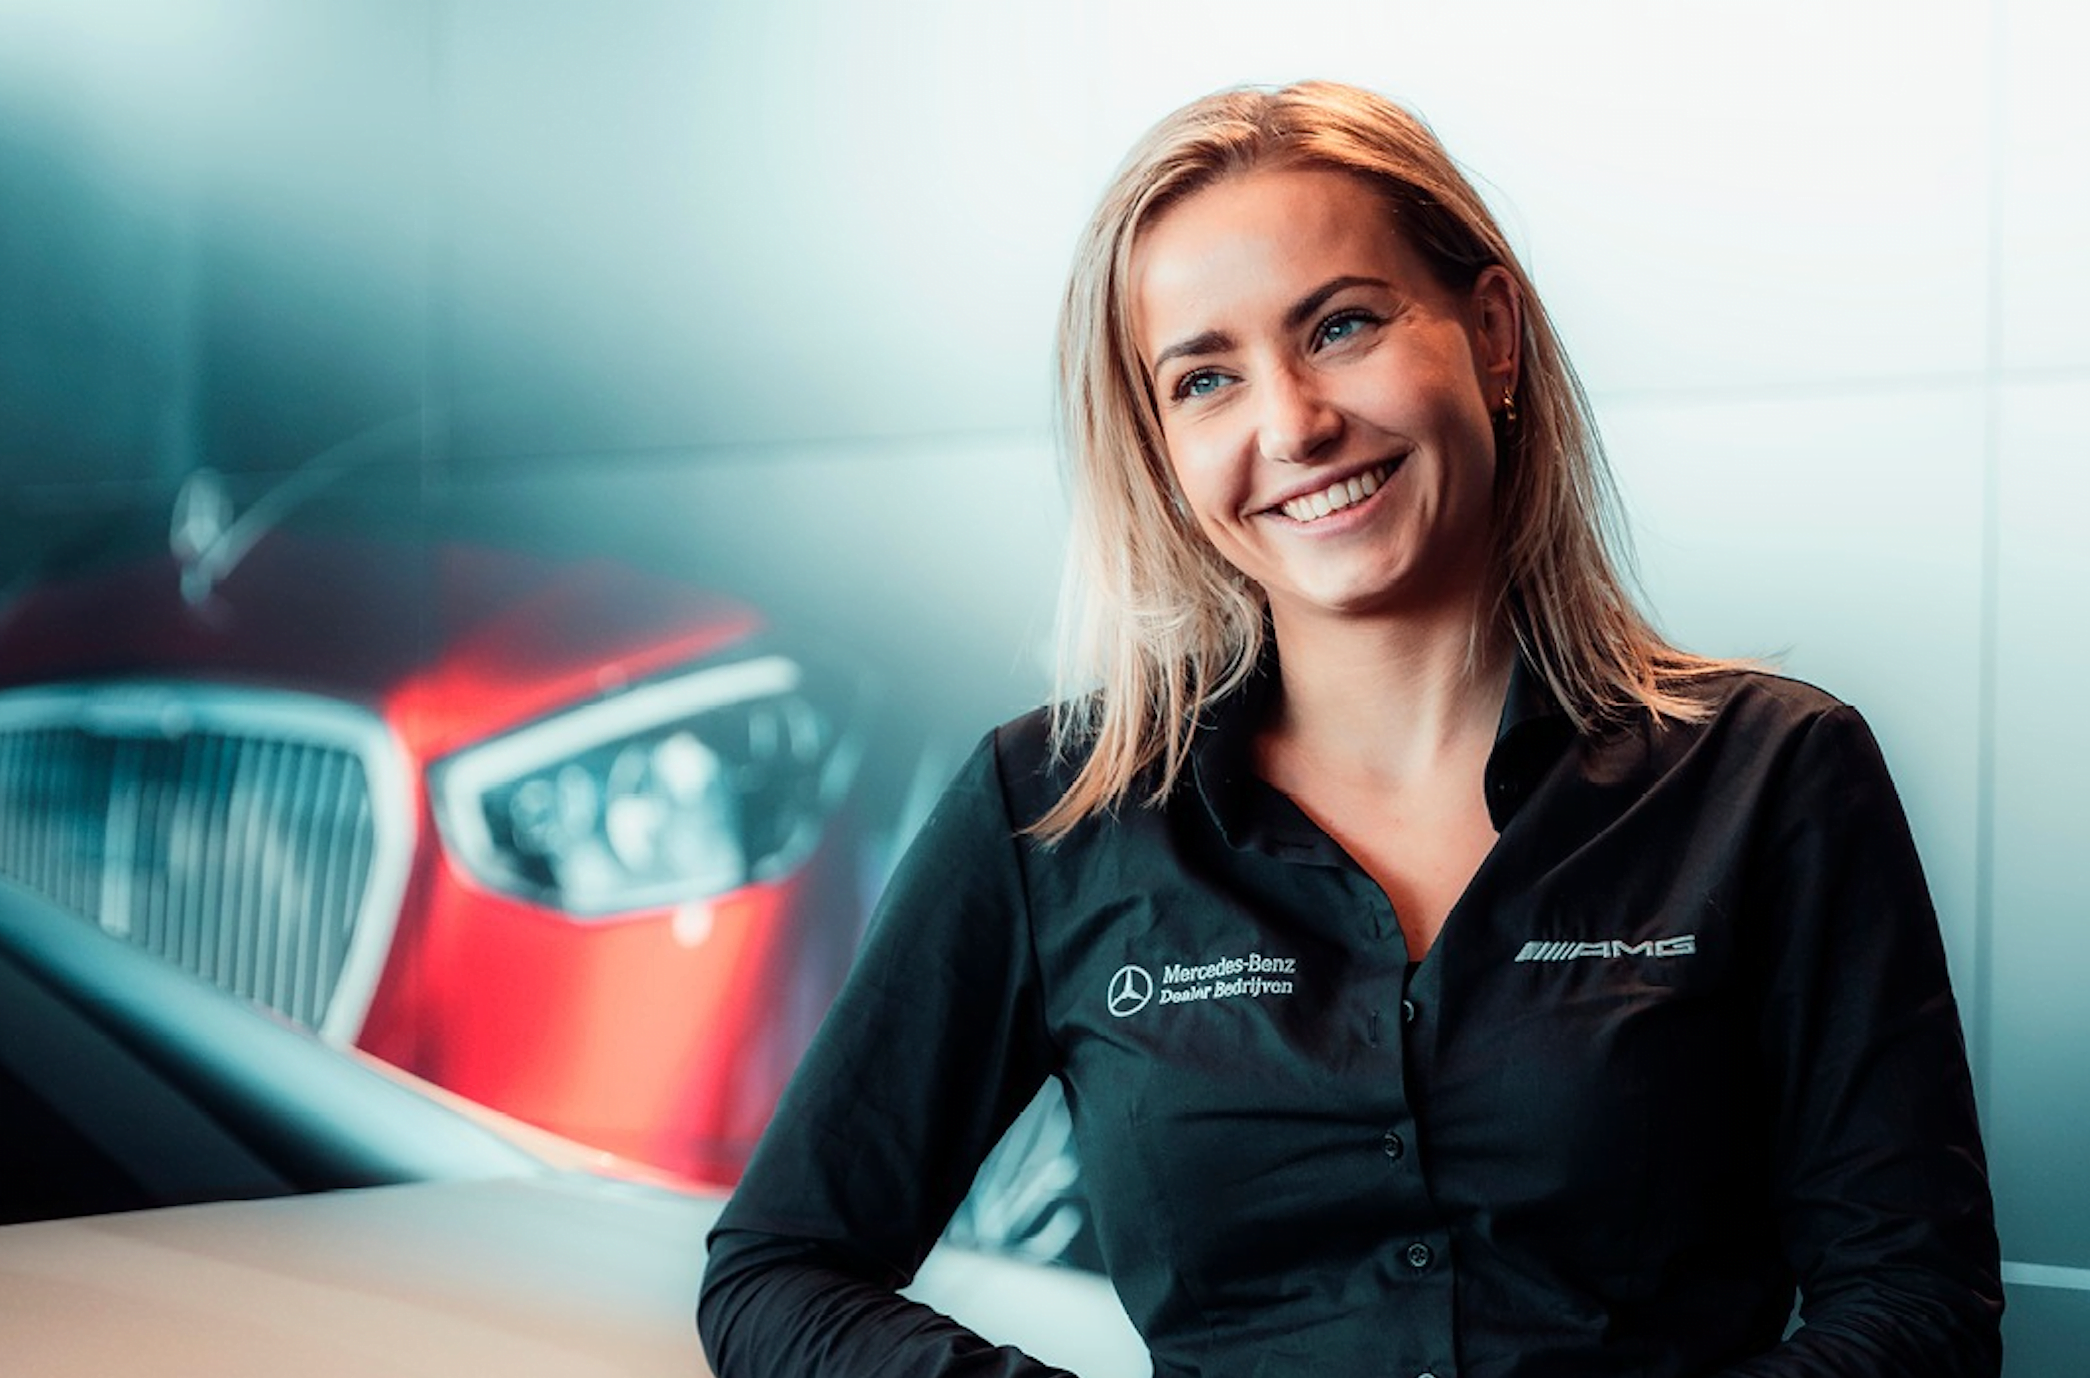 Meet Mercedes-Benz Product Expert Romy